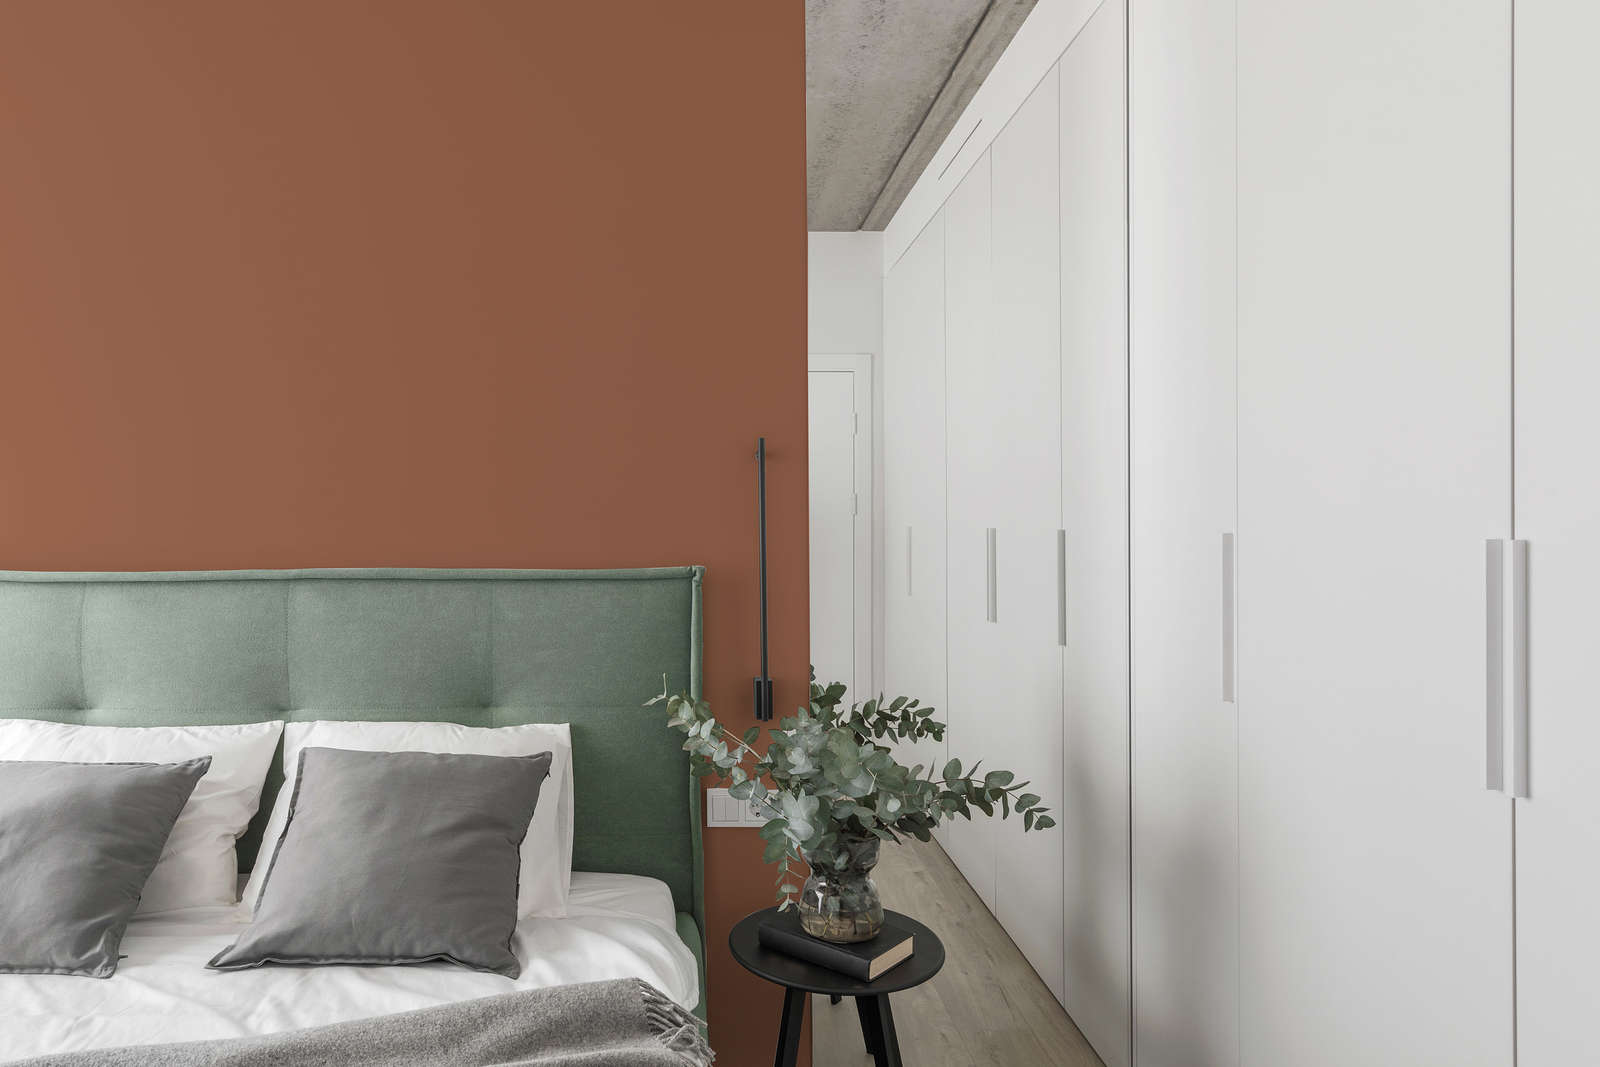             Premium Wall Paint Soothing Terracotta »Pretty Peach« NW909 – 1 litre
        